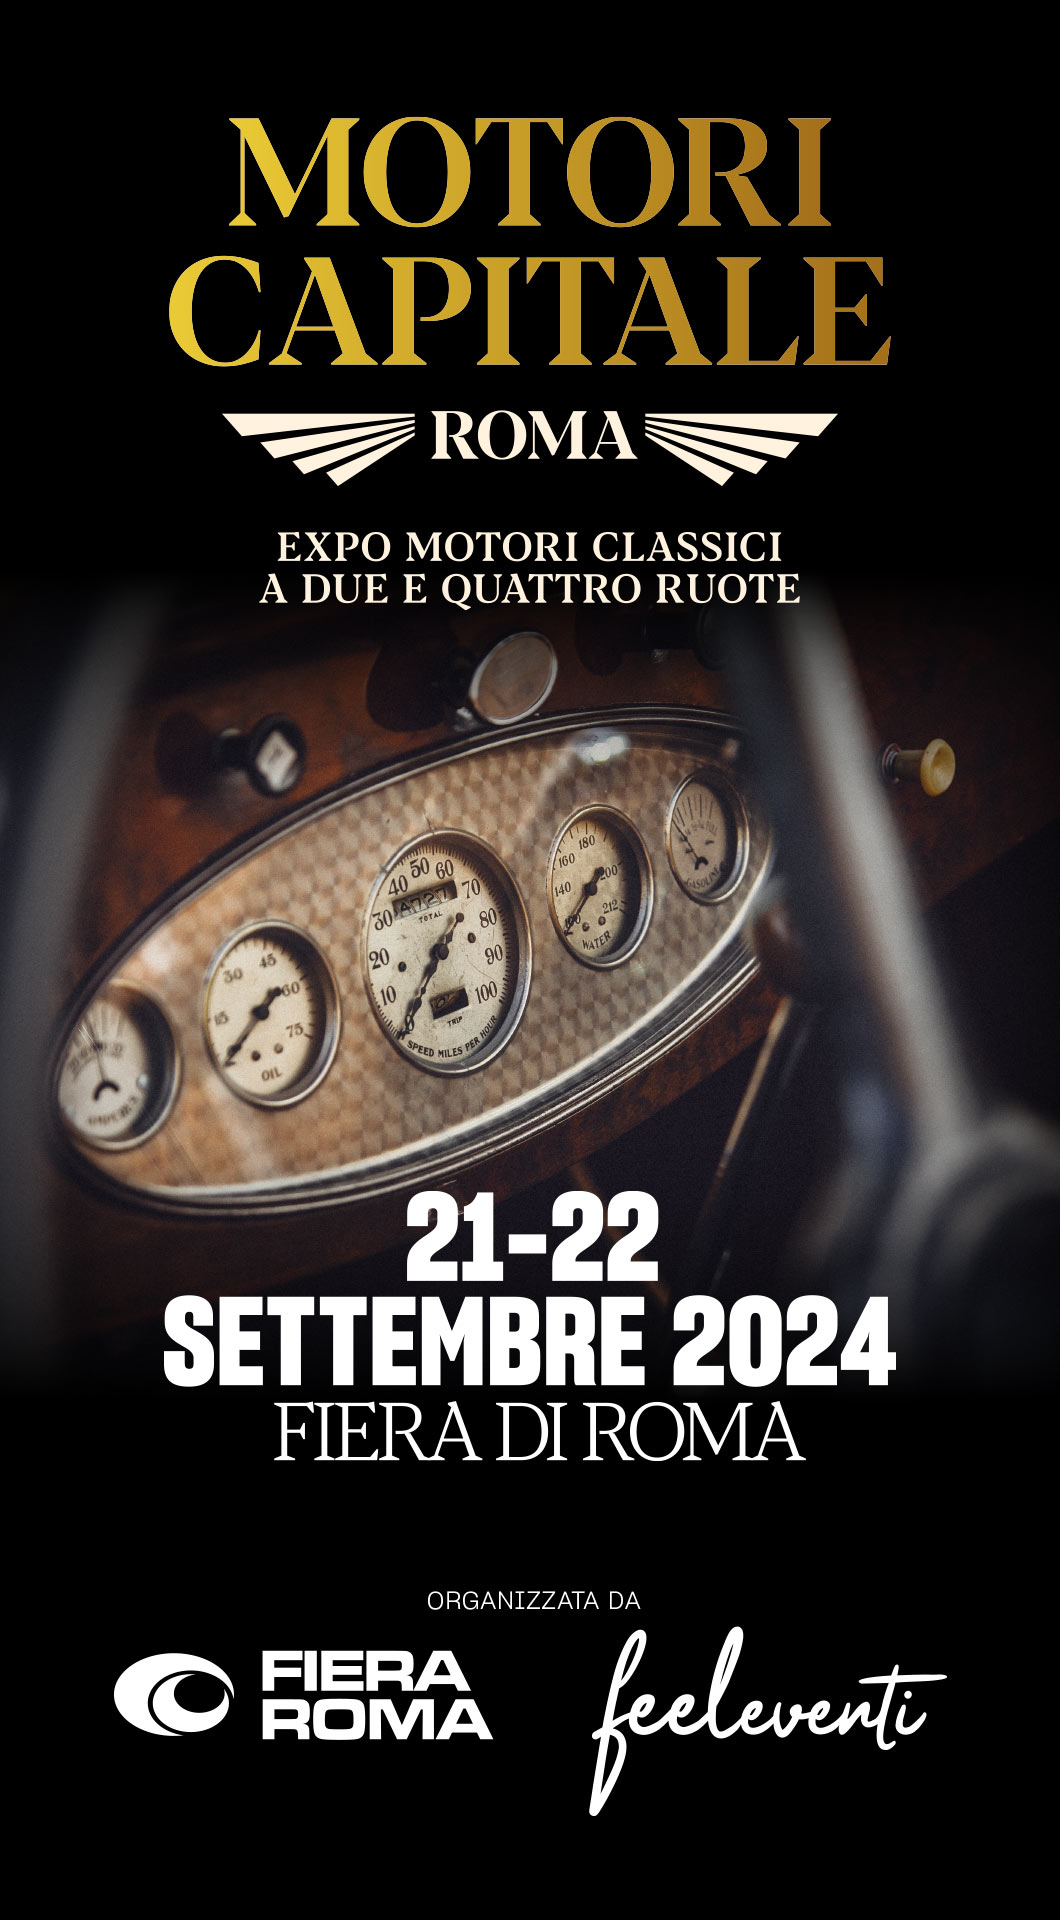 Motori Capitale Rome September 21-22, 2024 Fiera di Roma